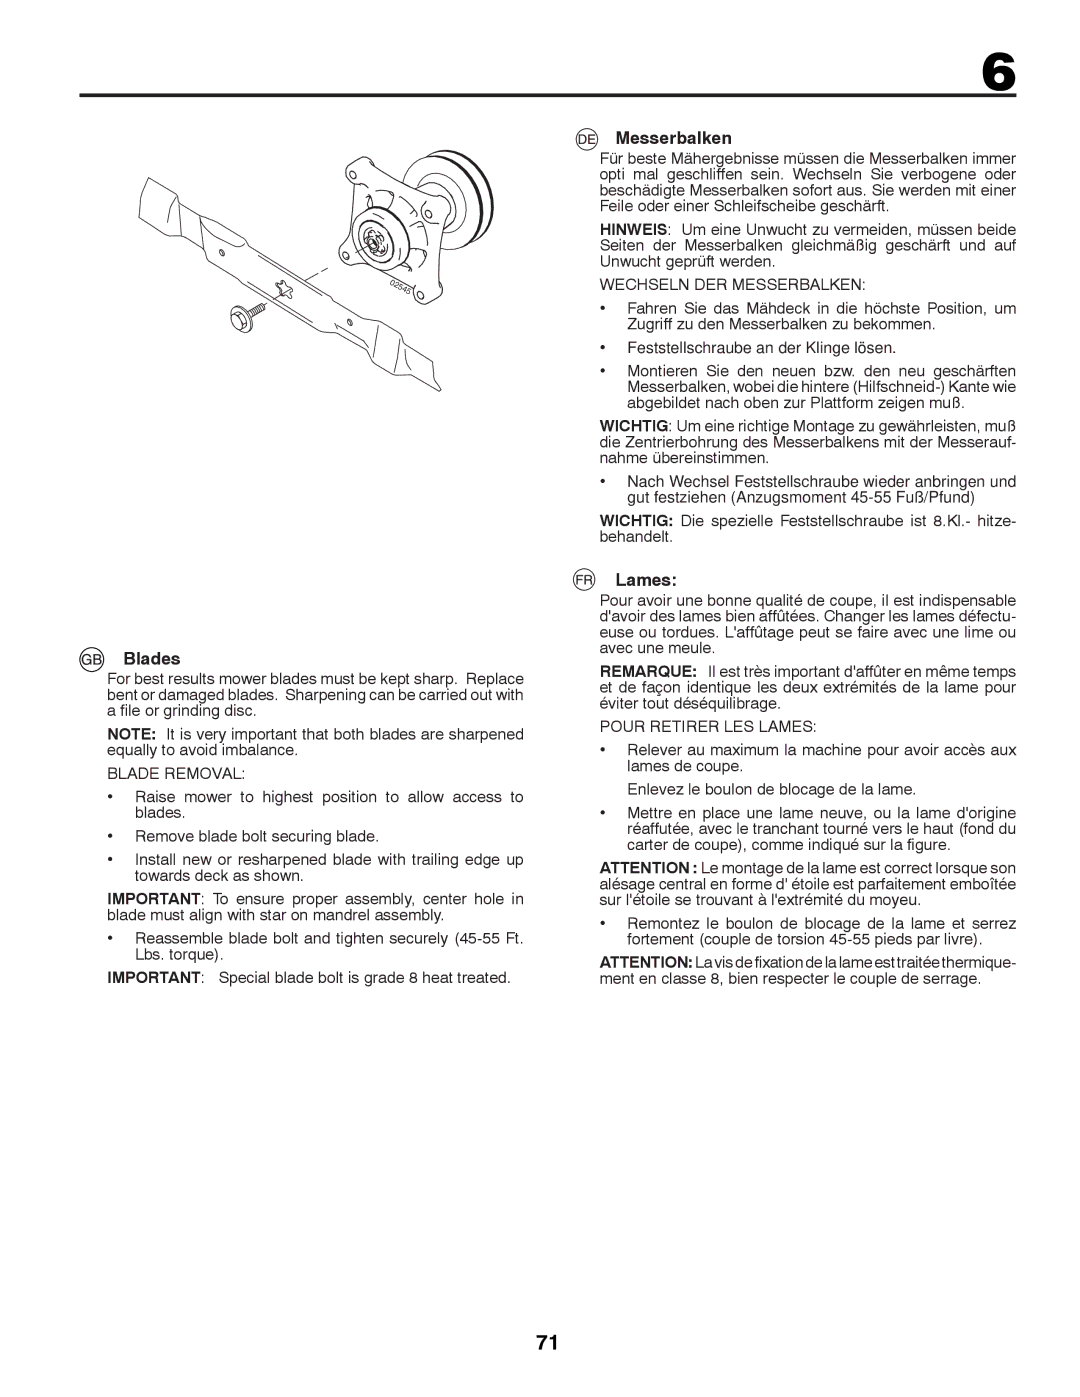 Husqvarna CTH126 instruction manual Blades, Messerbalken, Lames 